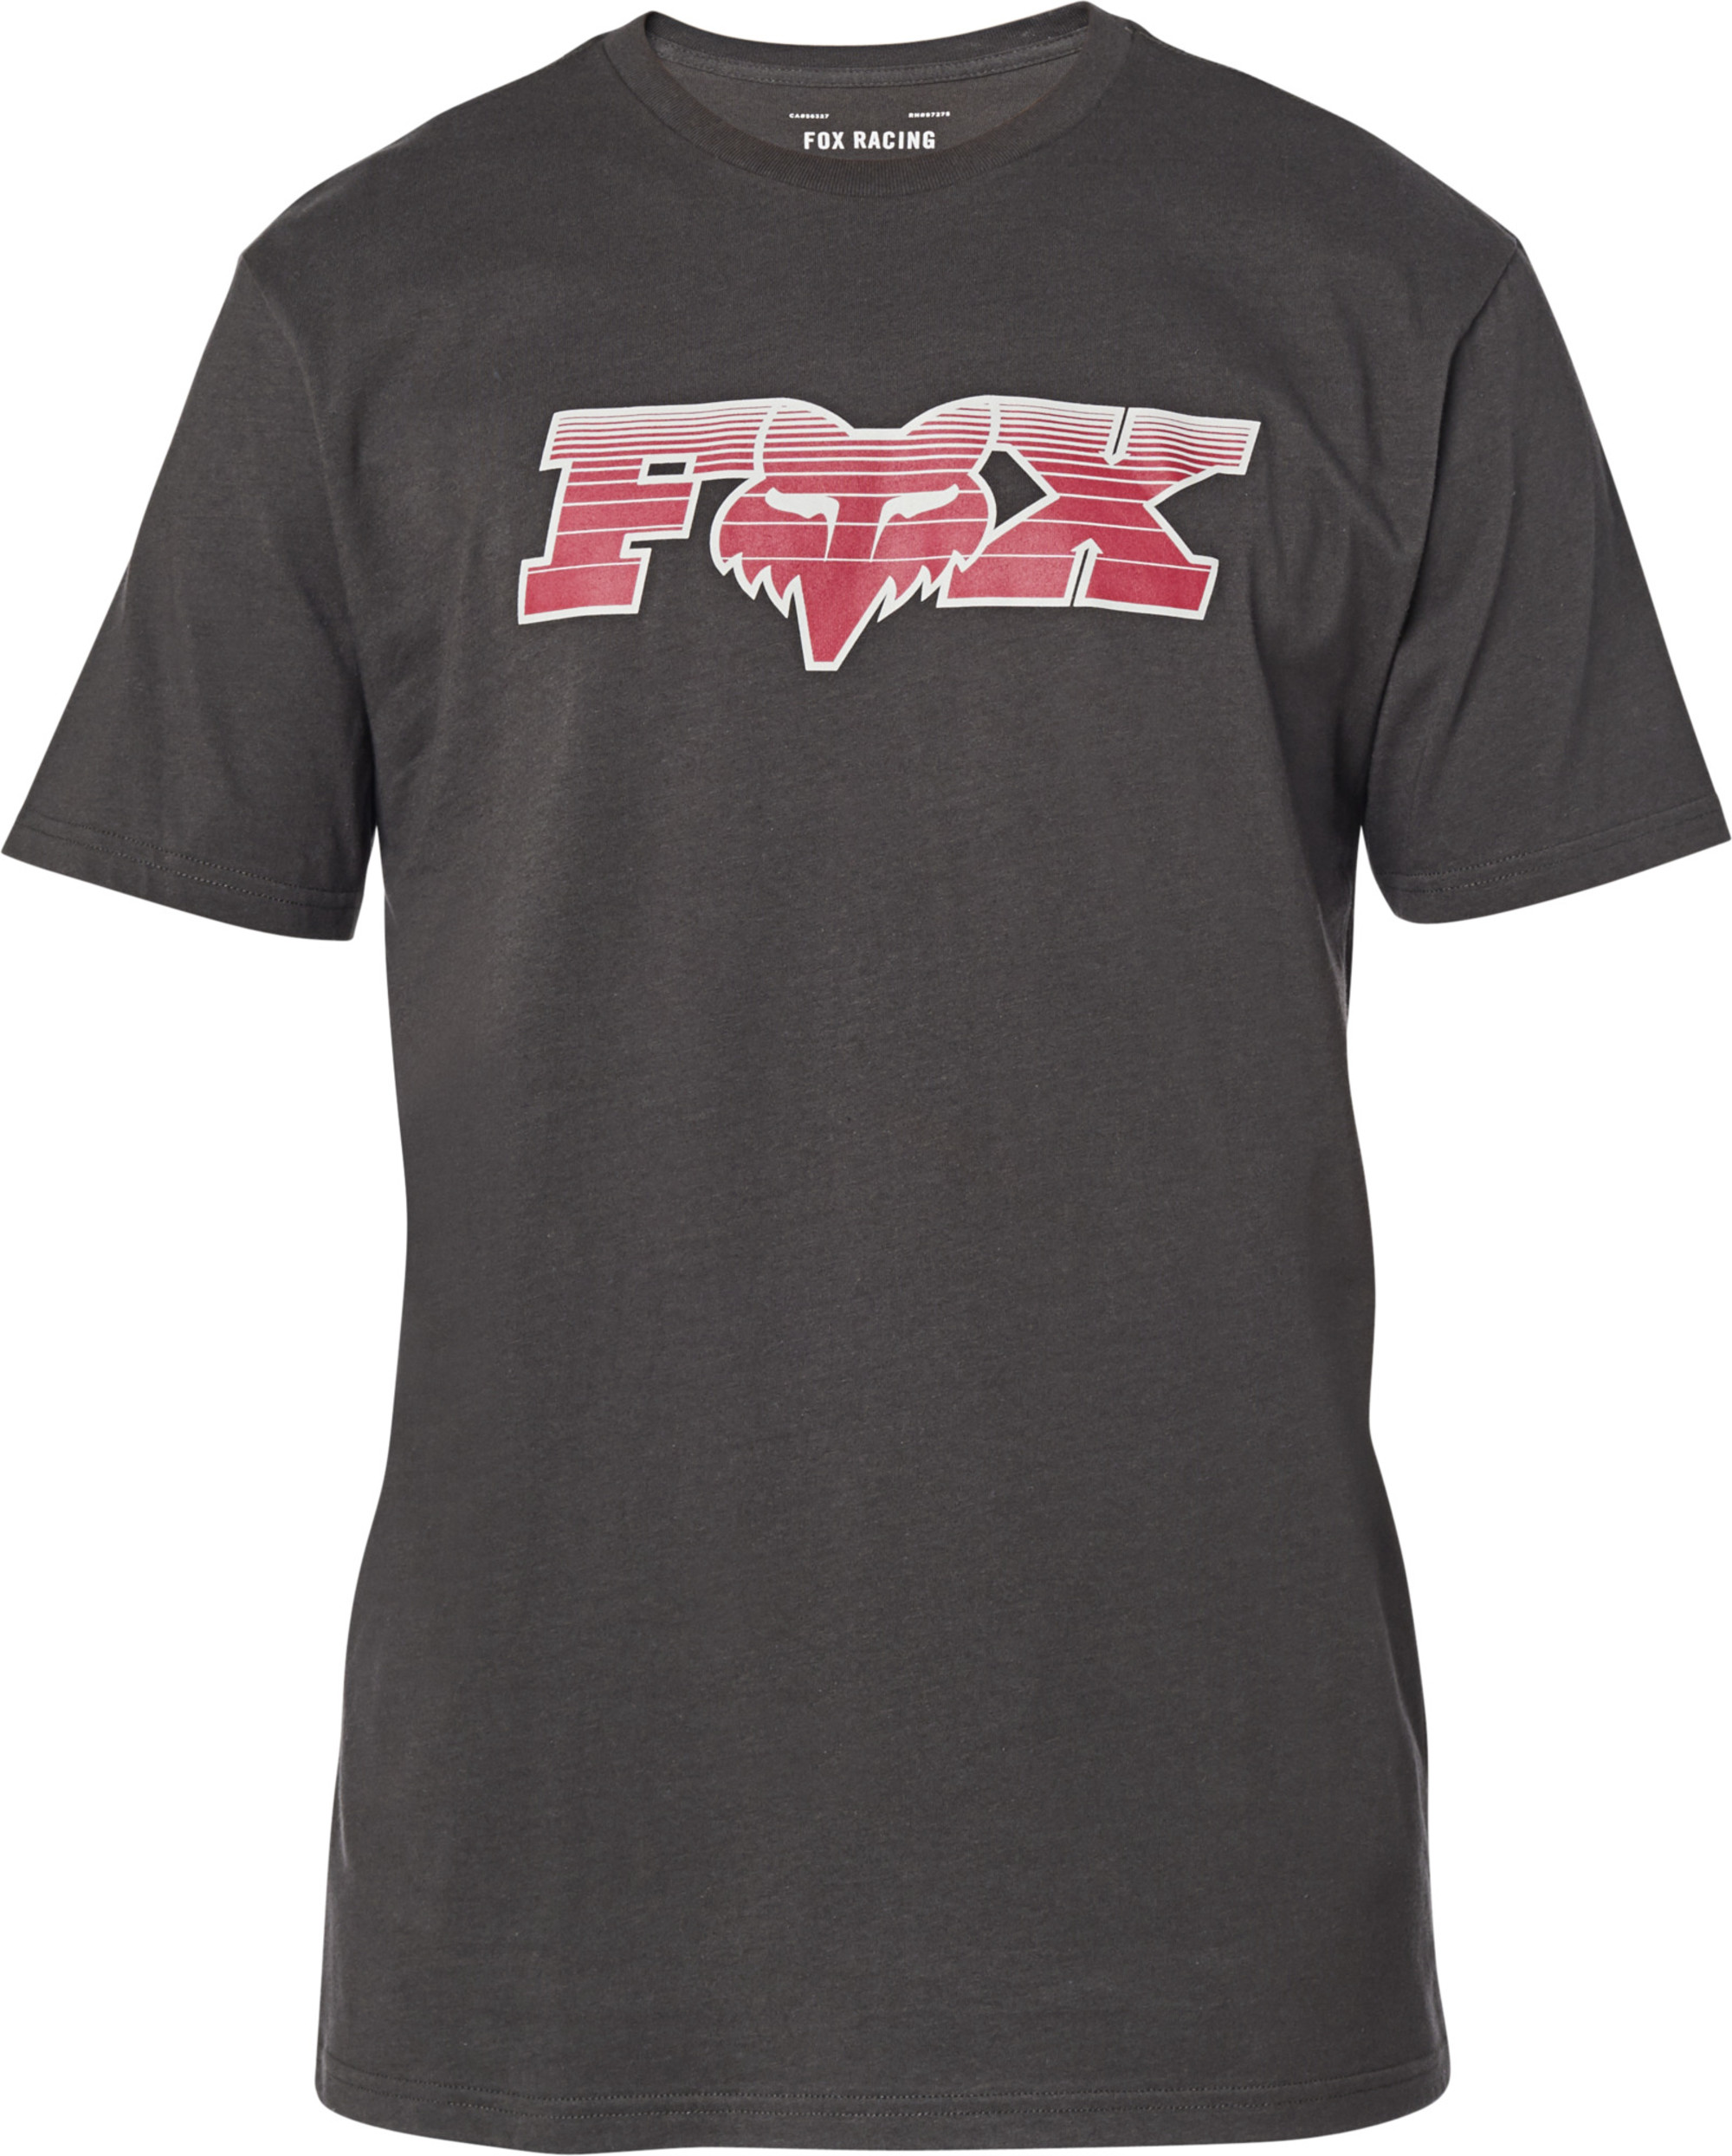 fox racing t-shirt shirts for men break out premium